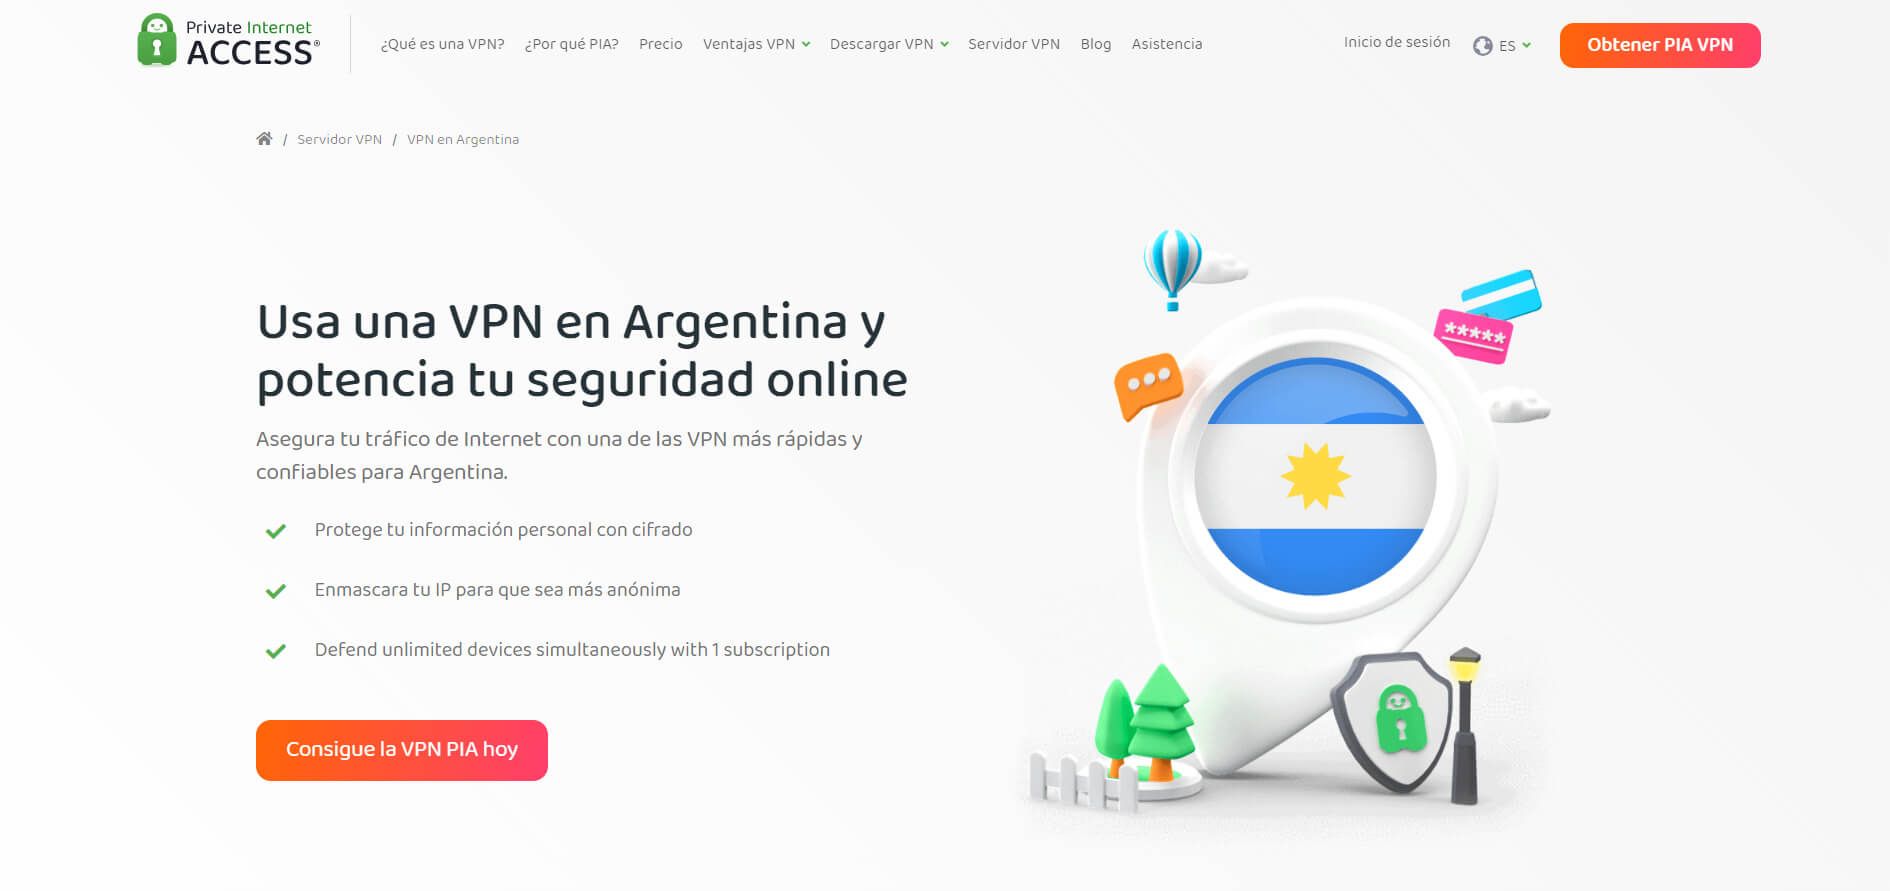 Private Internet Access PIA Argentina